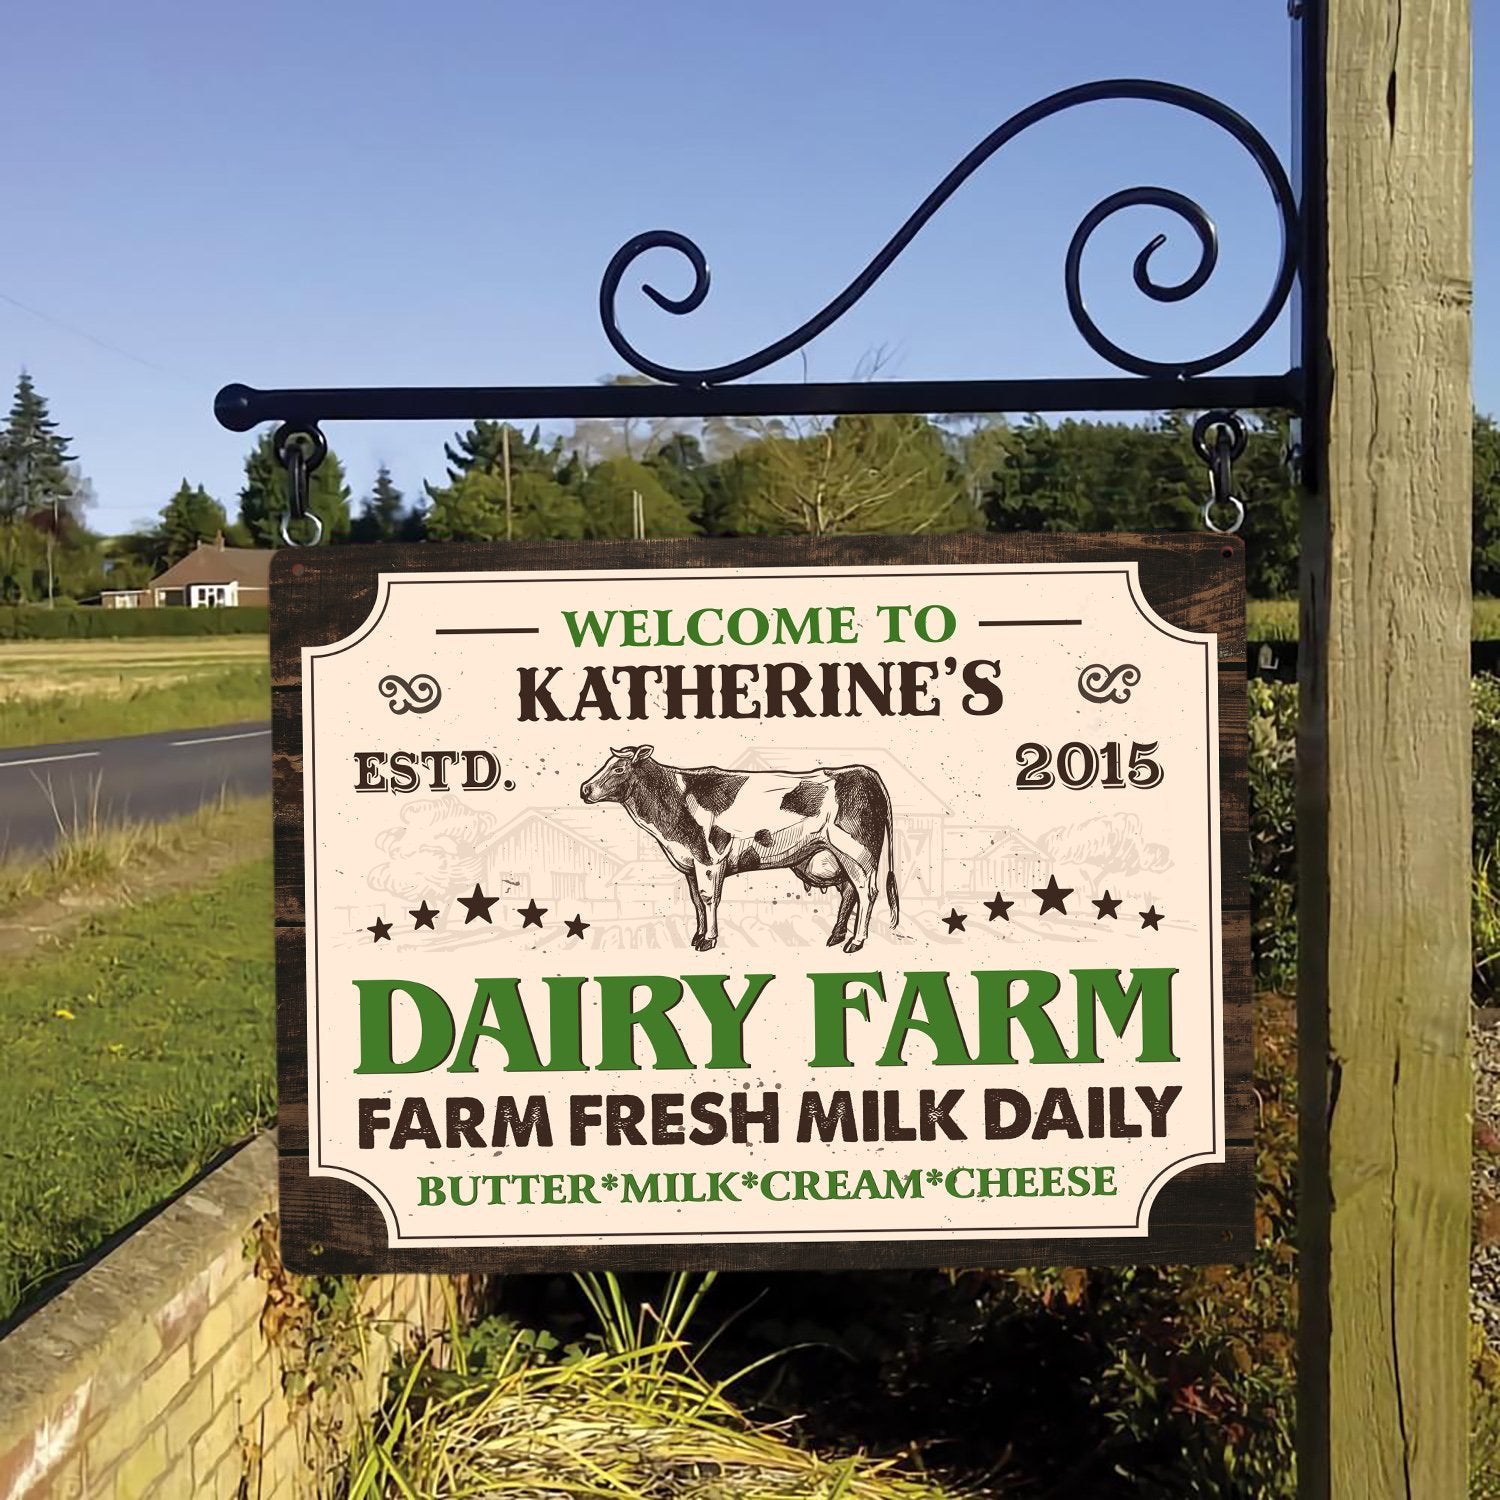 Dairy Farm, Farm Fresh Milk Daily, Customized Farm Sign